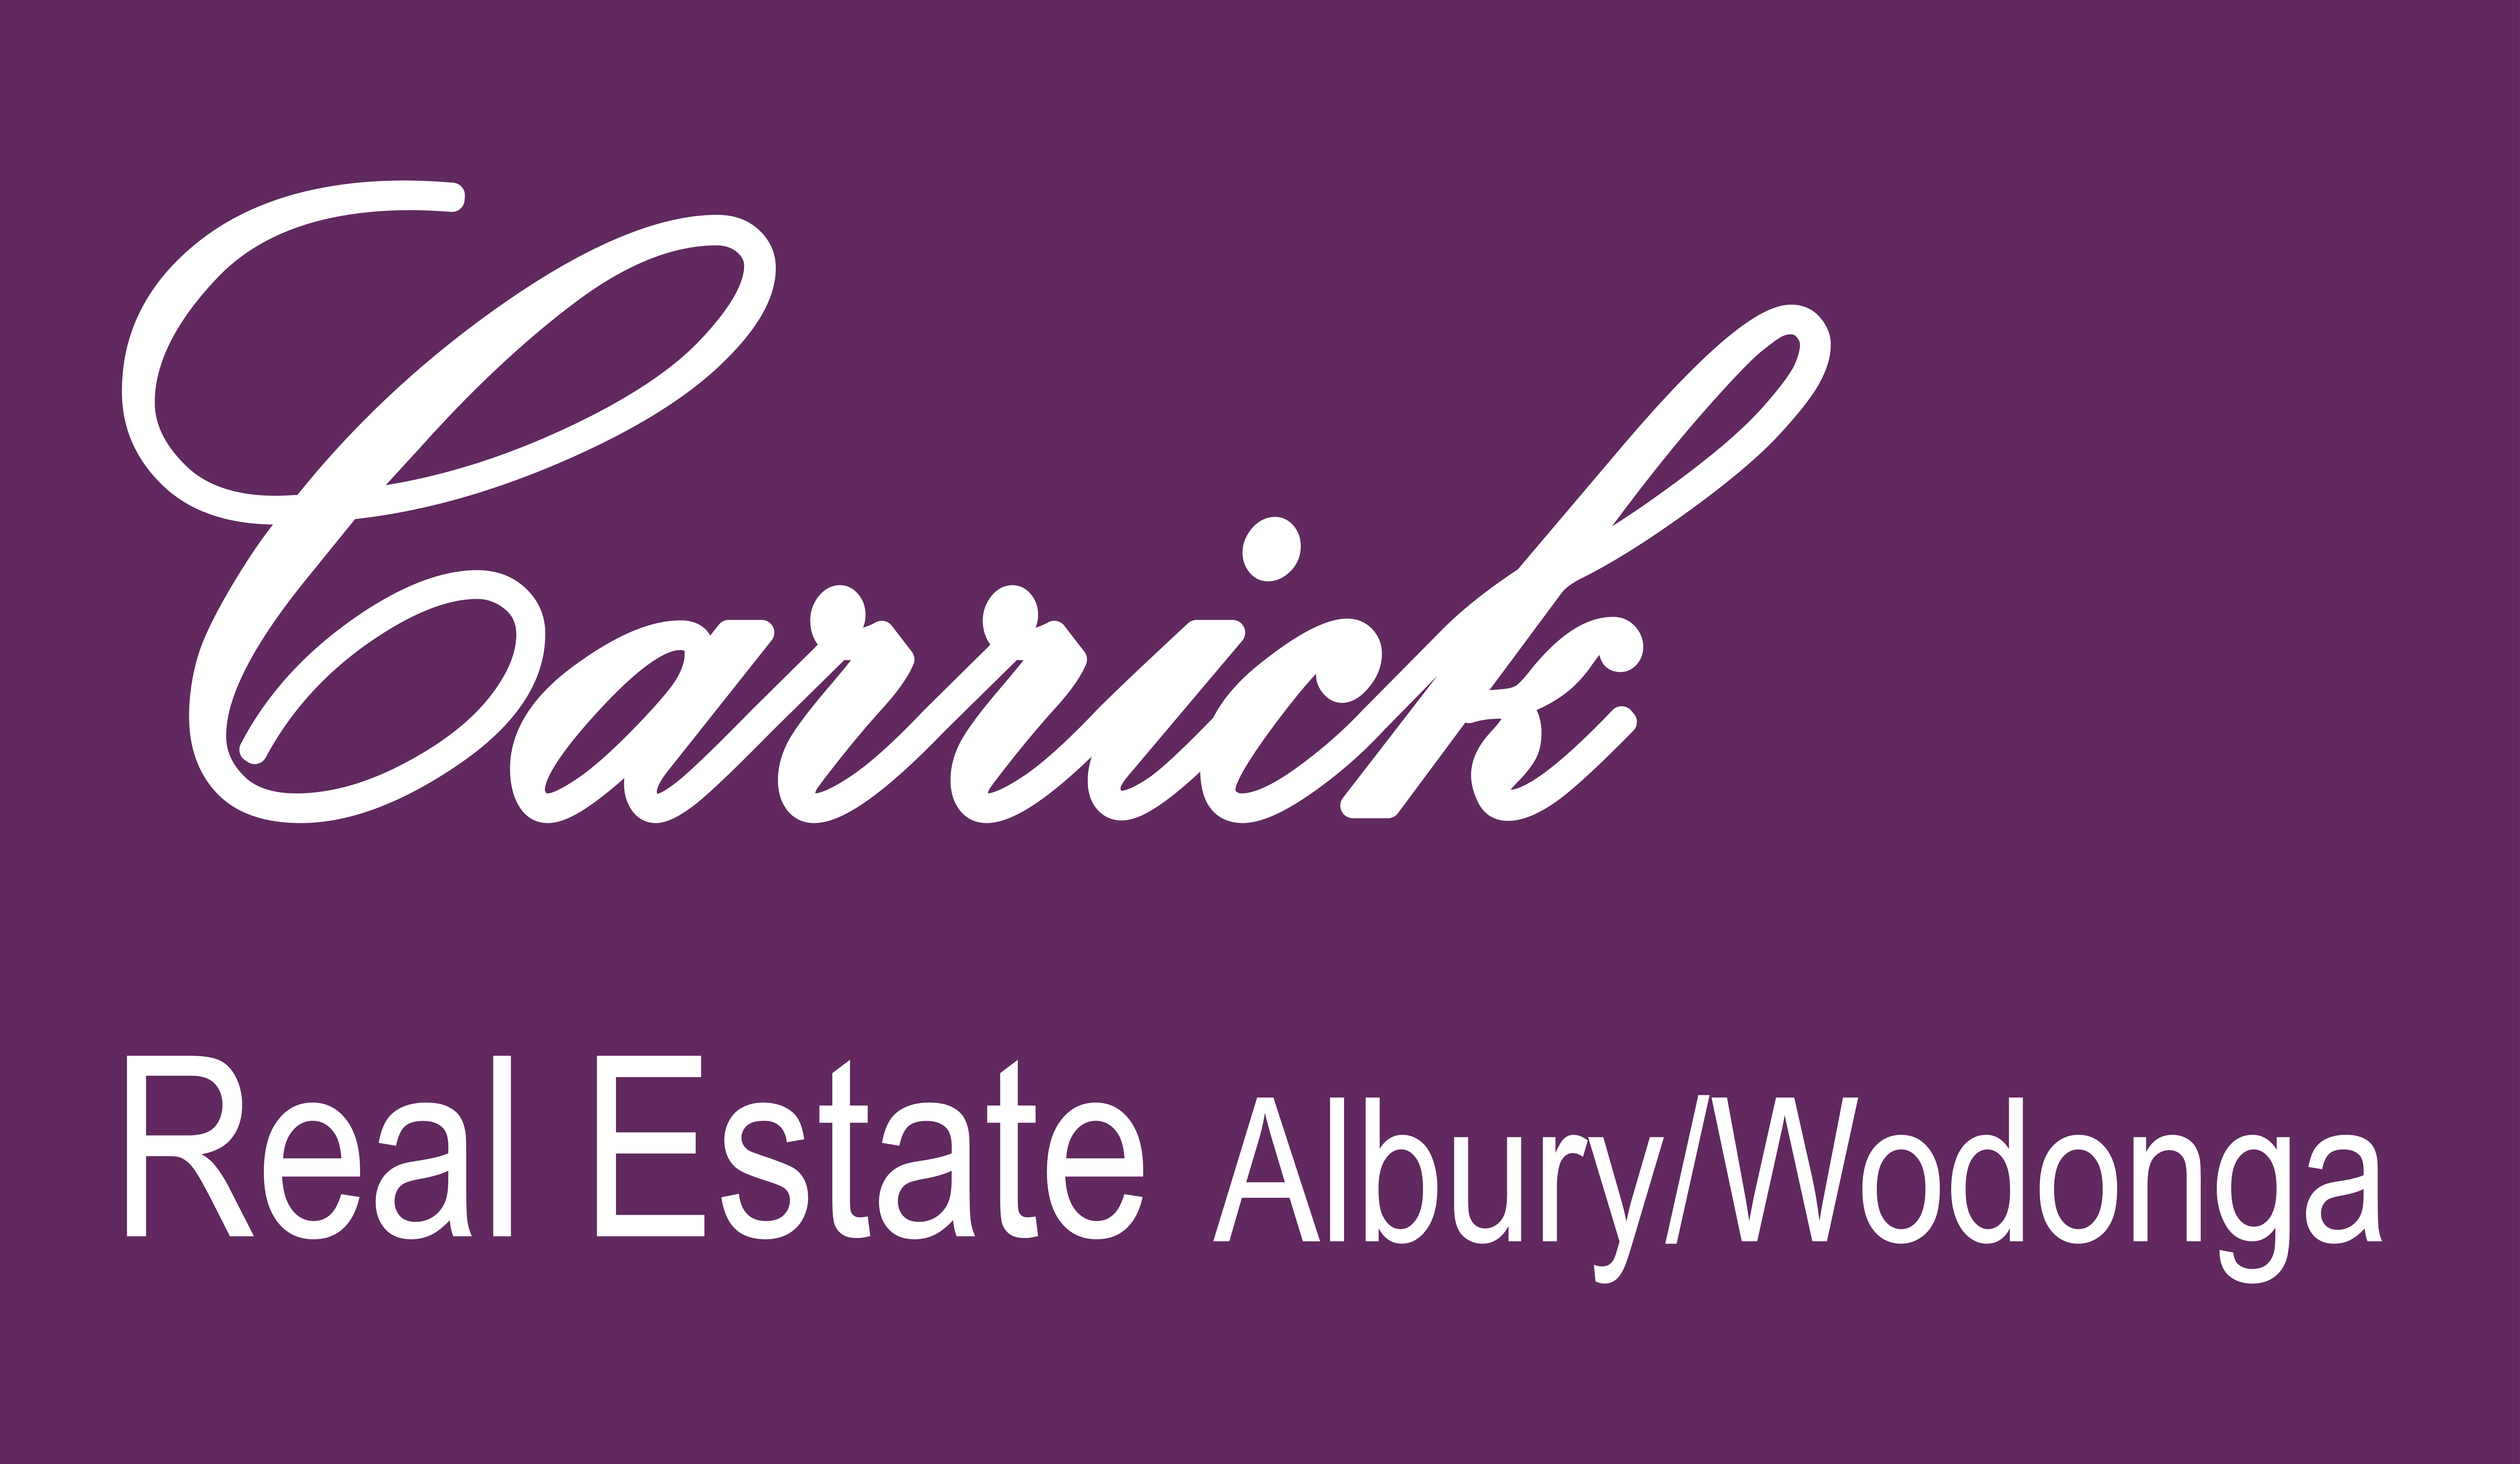 Carrick Real Estate